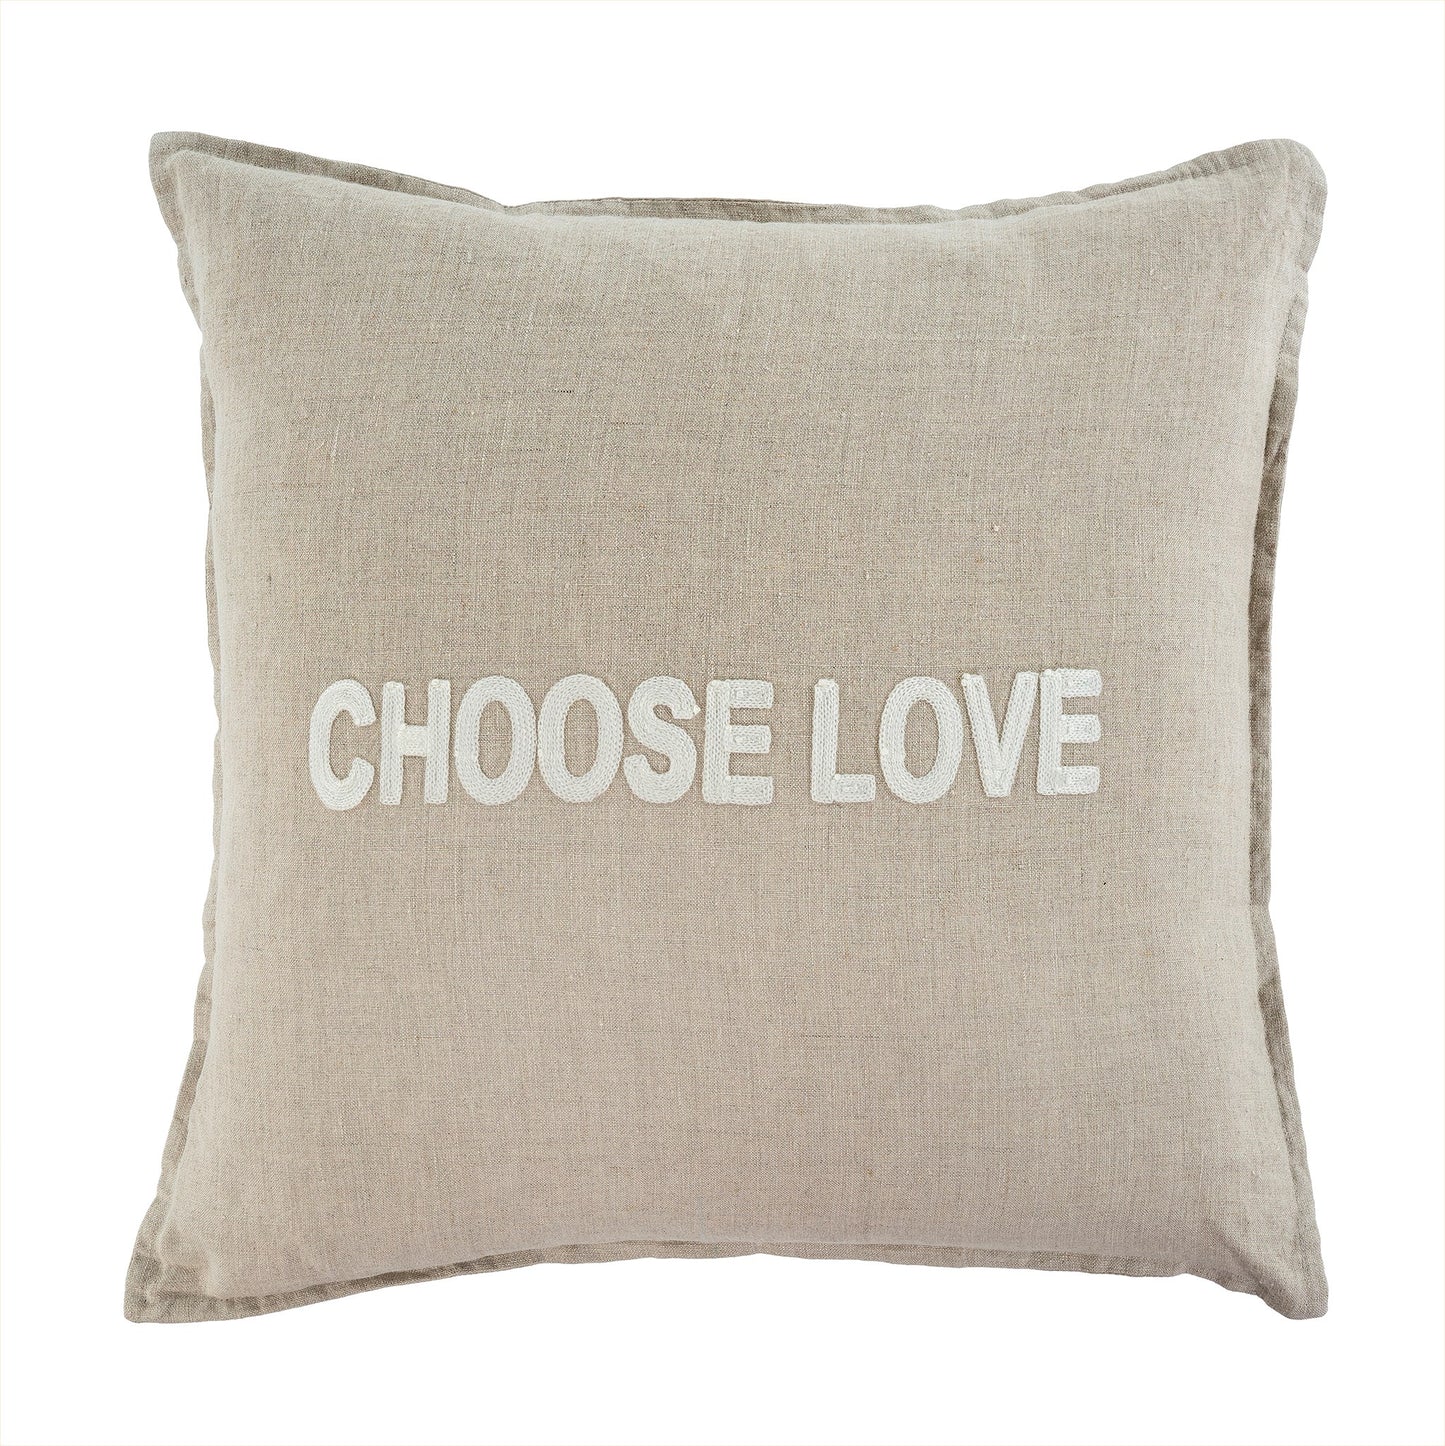 Choose love Pillow